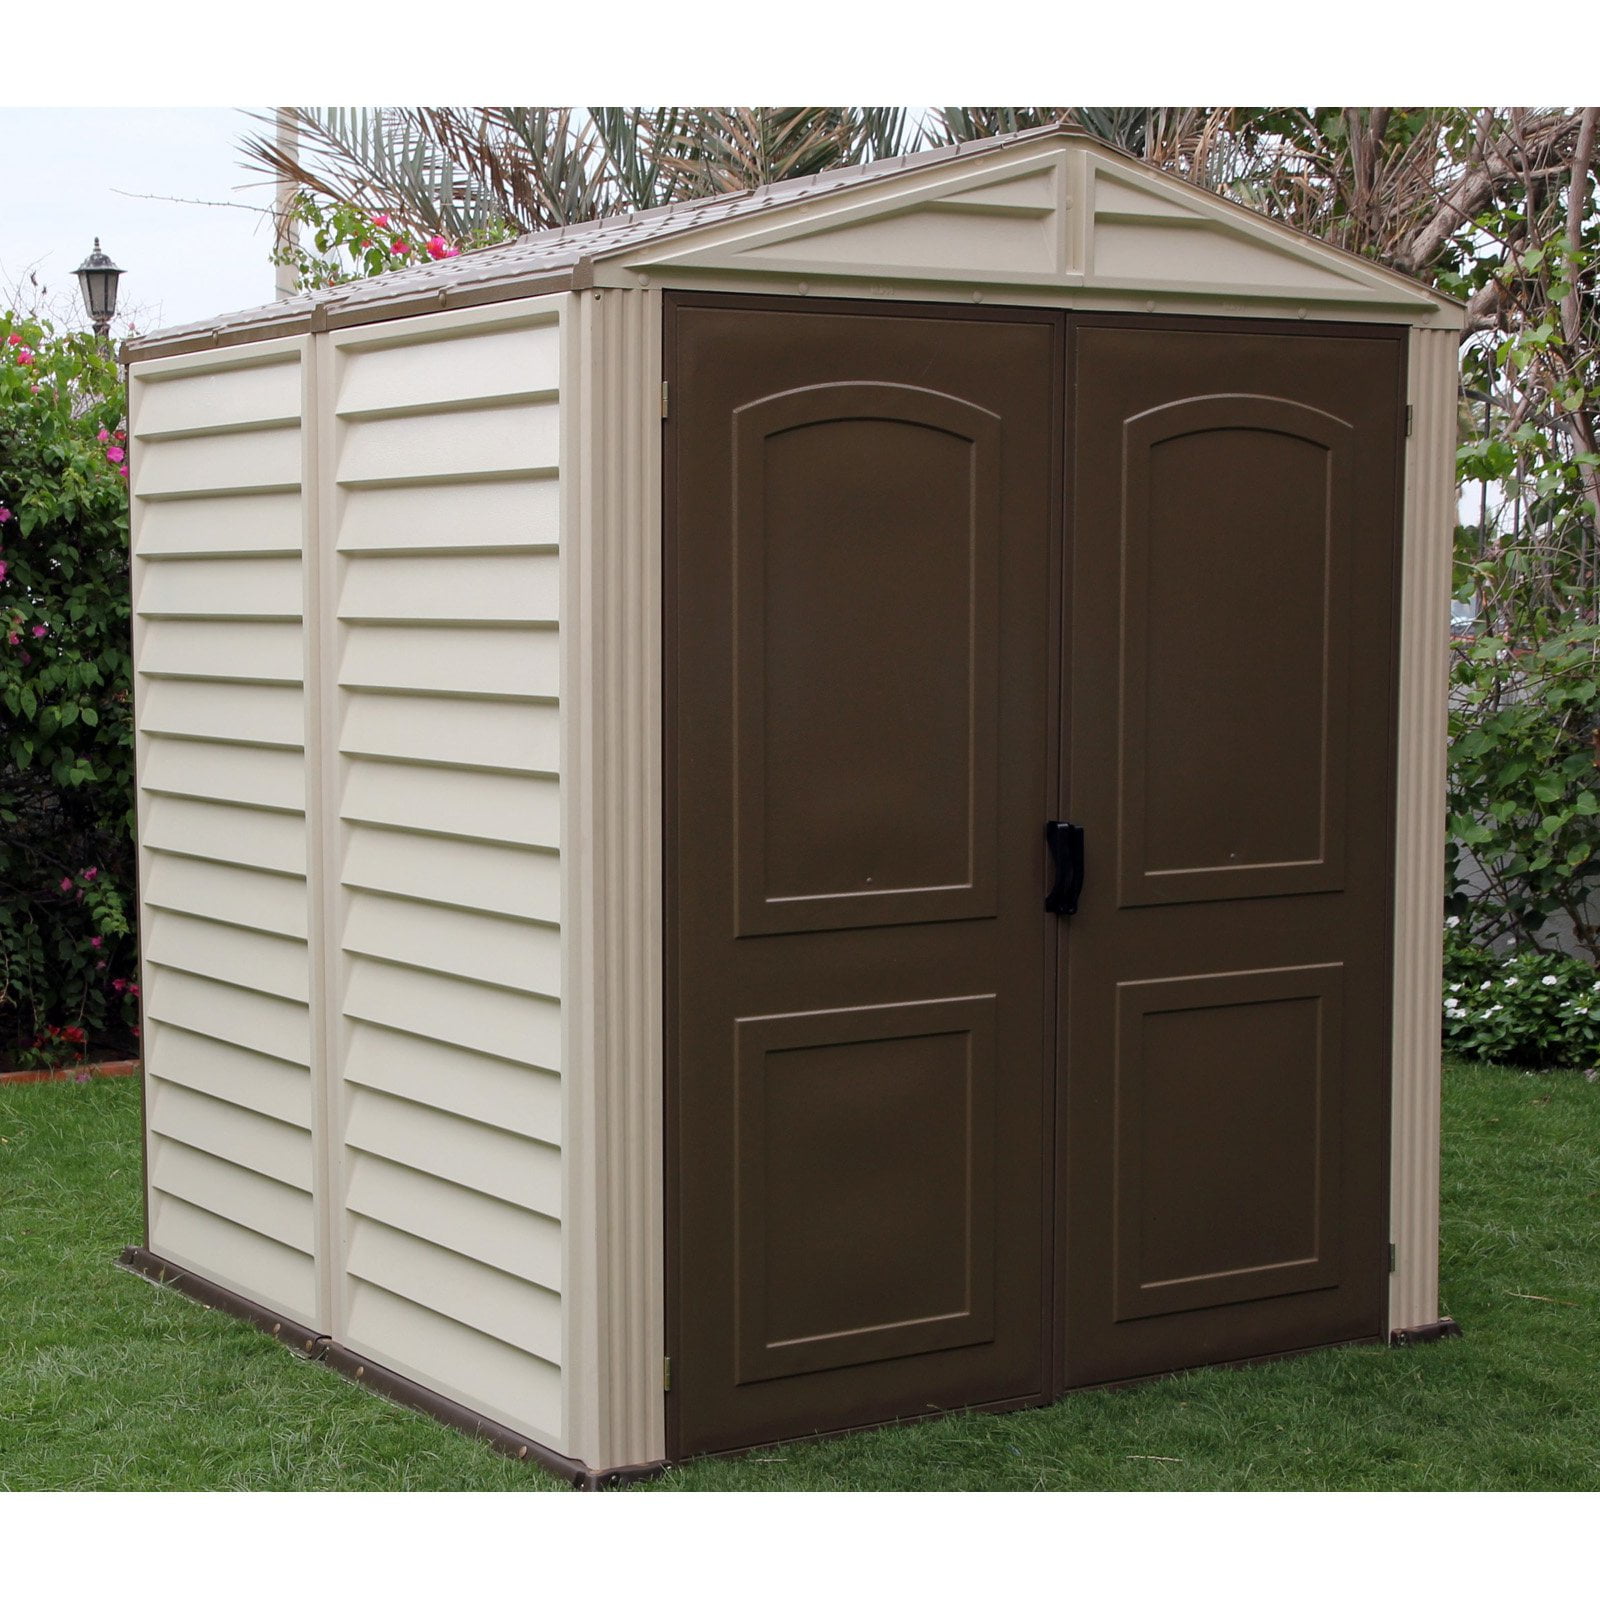 duramax woodside vinyl shed with floor - 6 x 6 ft